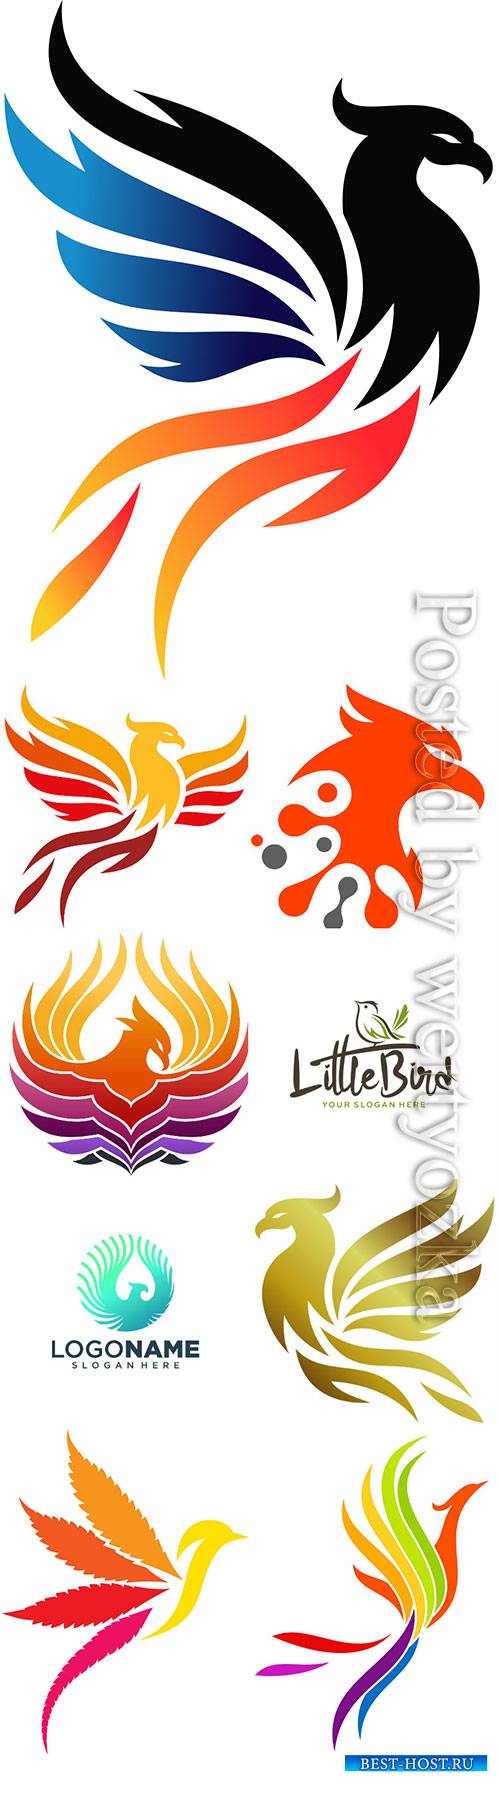 Phoenix logo collection vector illustration